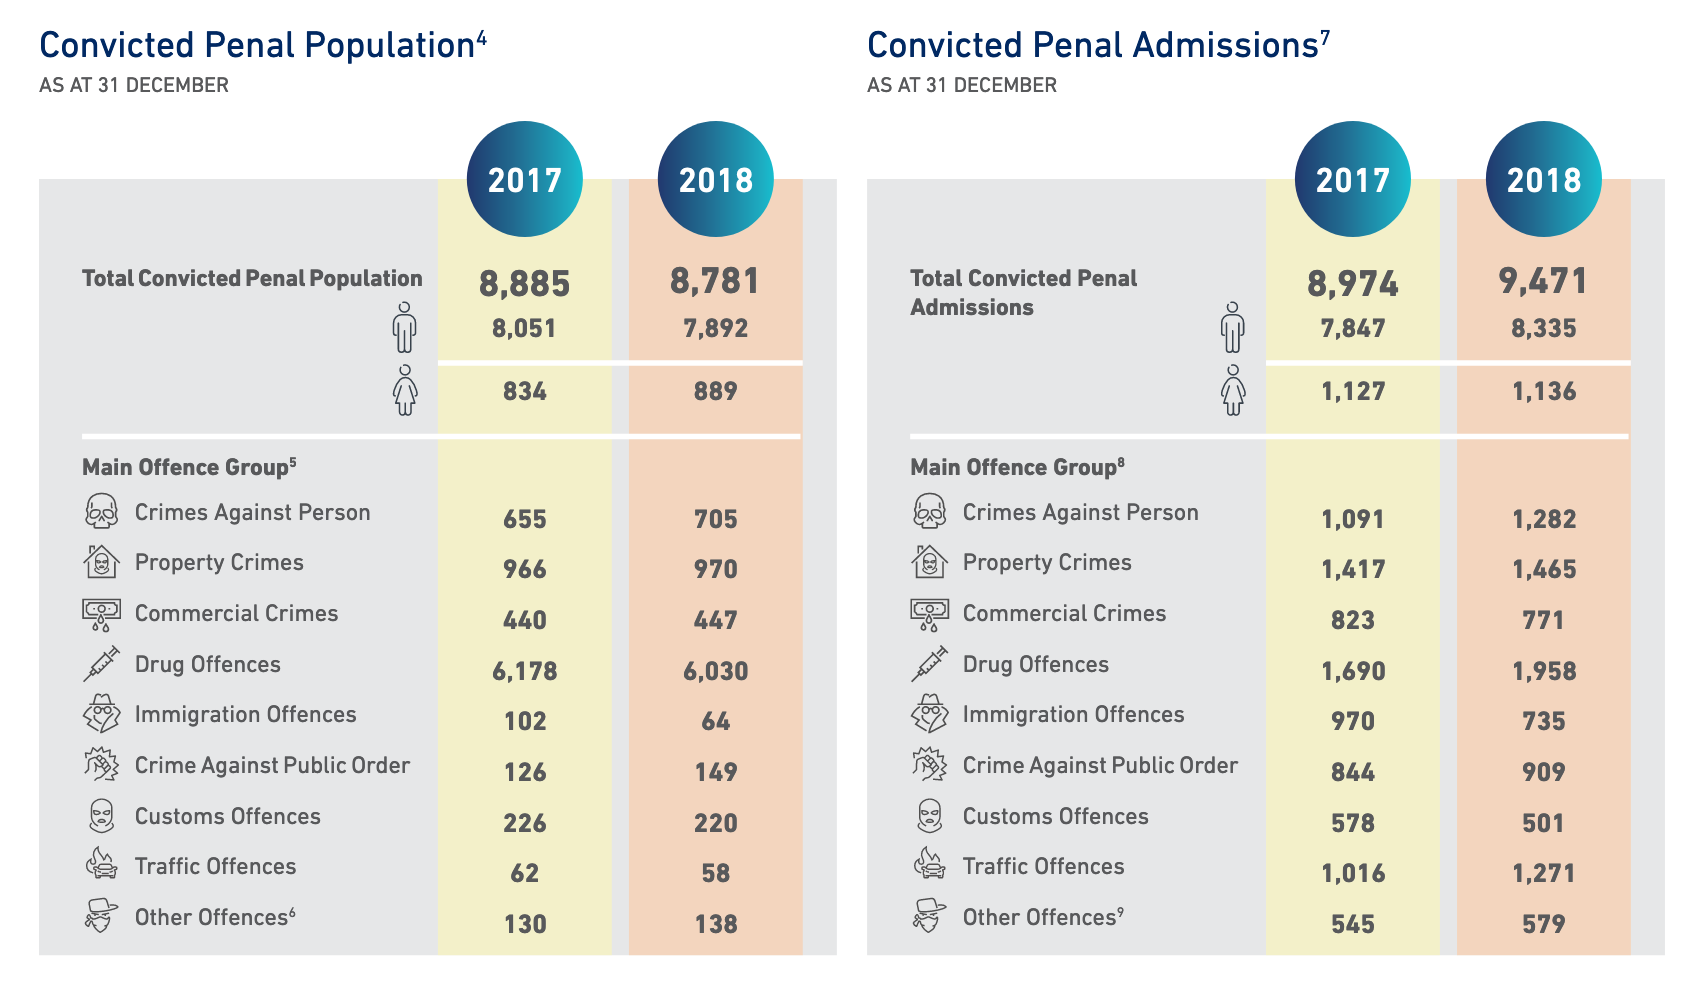 Singapore Convicted Penal Population 2018 - New Naratif